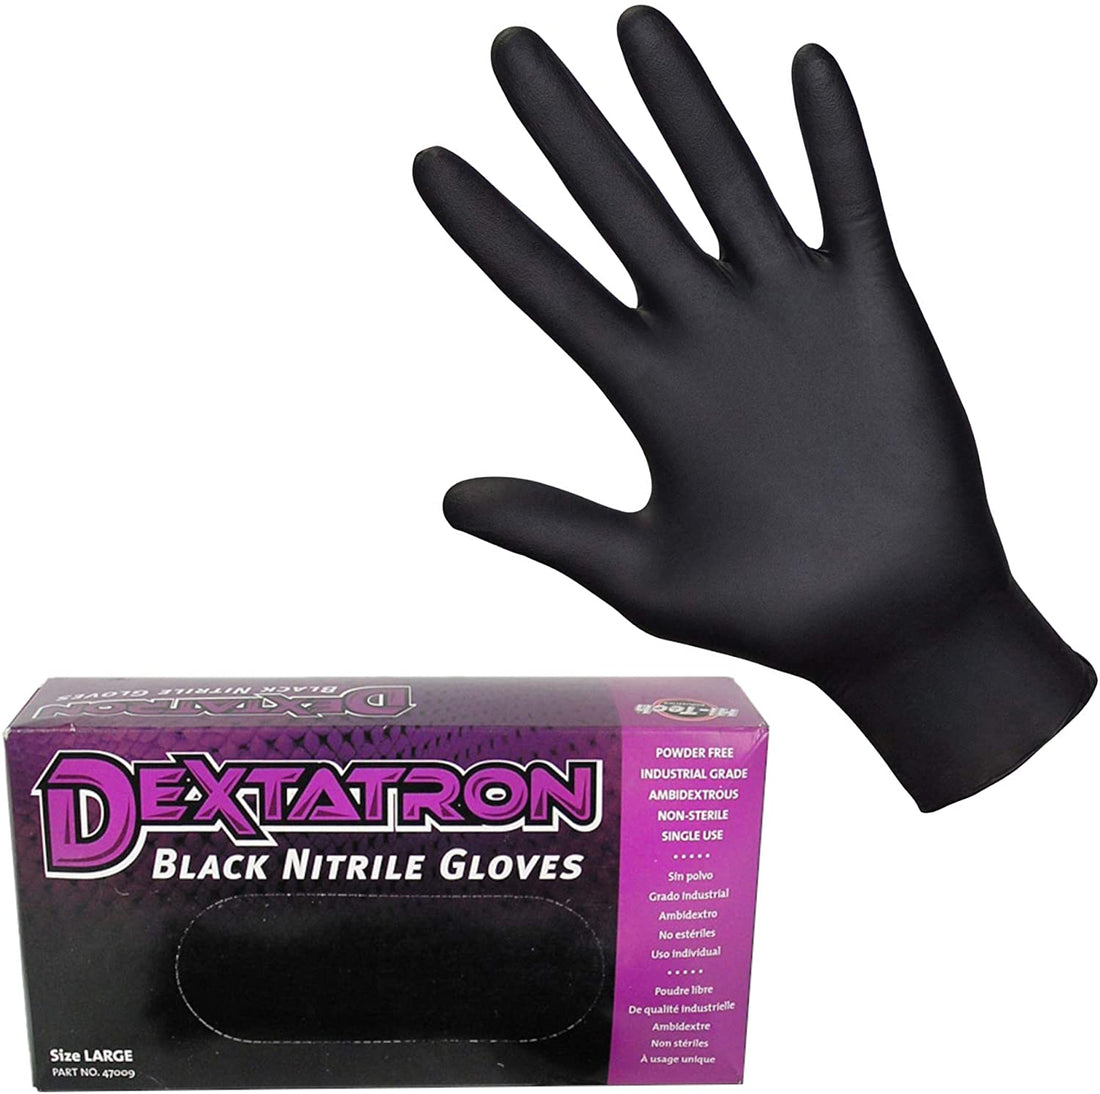 DEXTATRON Non-Sterile Powder Free Black Nitrile Disposable Gloves, 100 Gloves (X-Large) - Detailing Connect